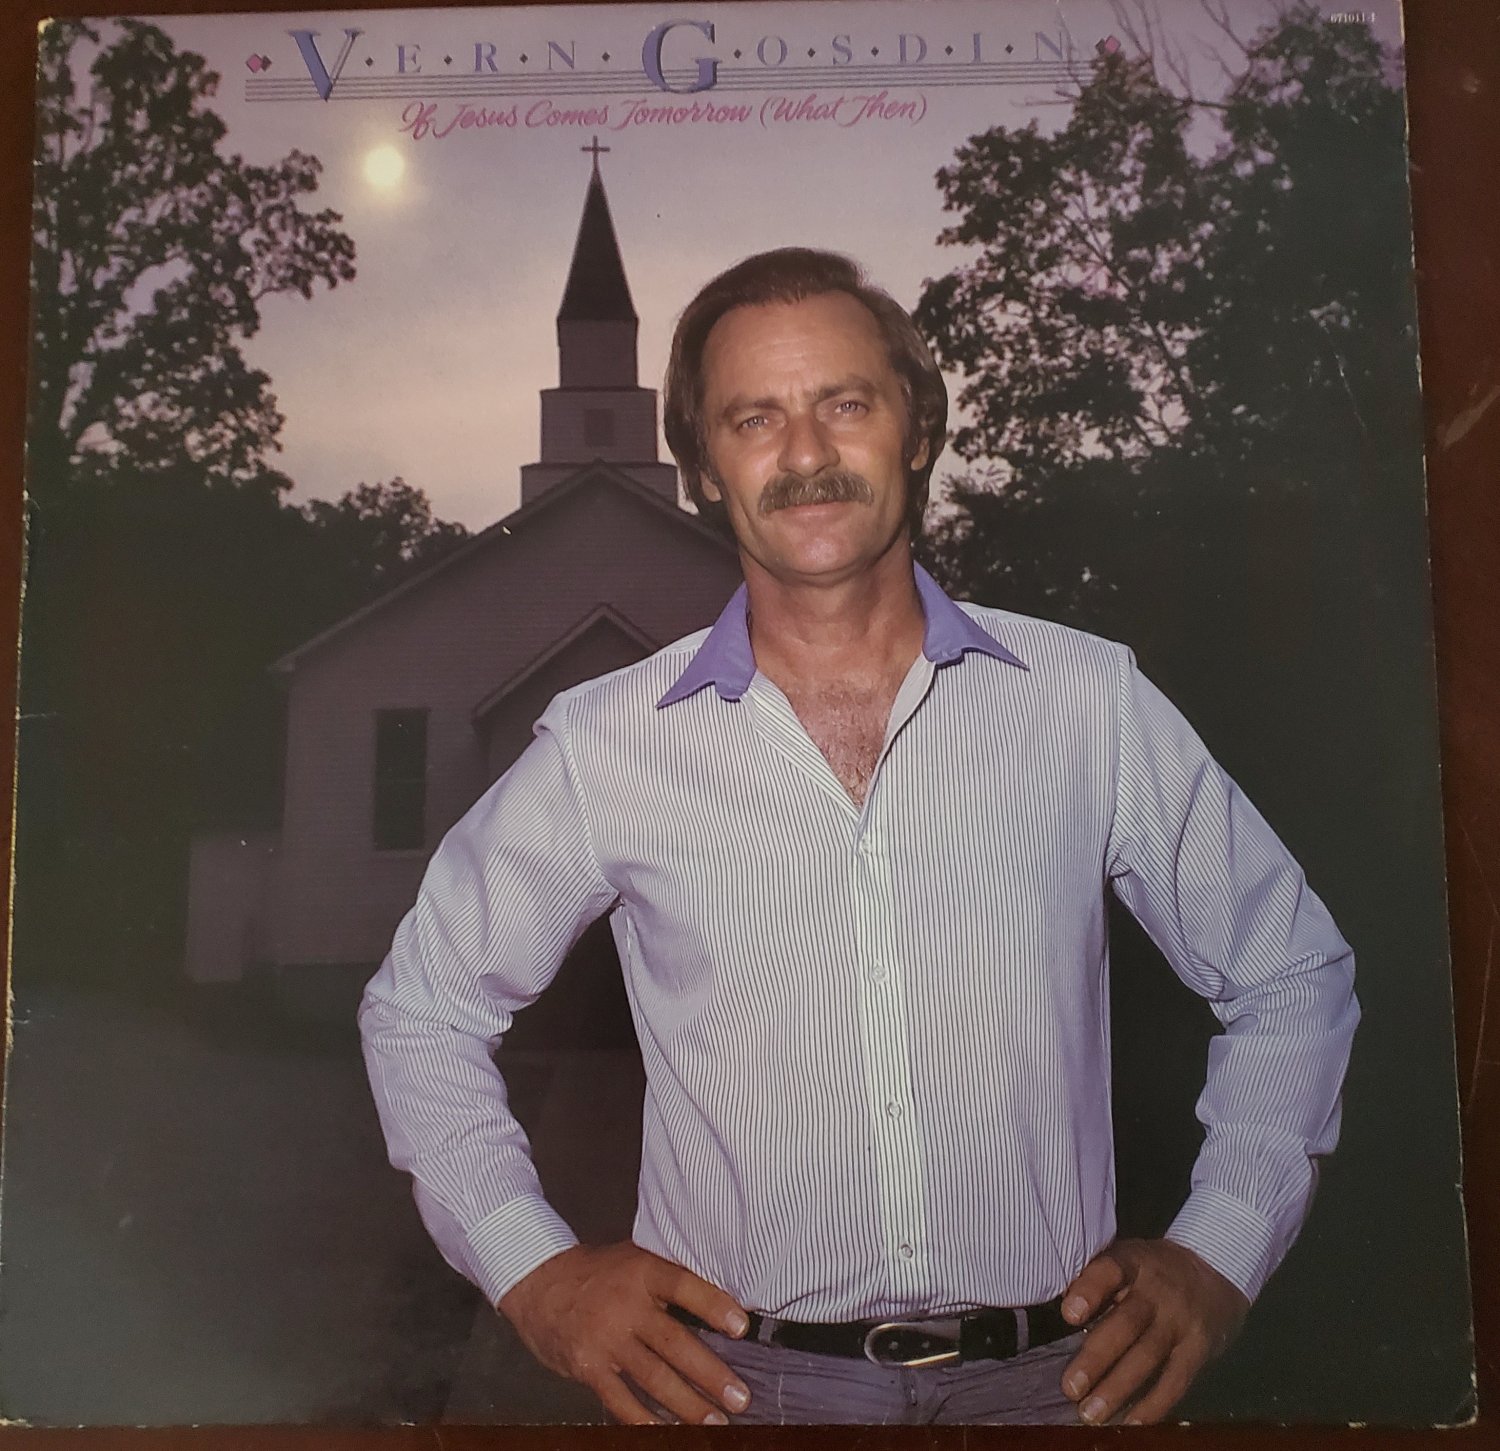 Vern Gosdin If Jesus Comes Tomorrow (What Then) Gospel 33 RPM Vinyl Record LP